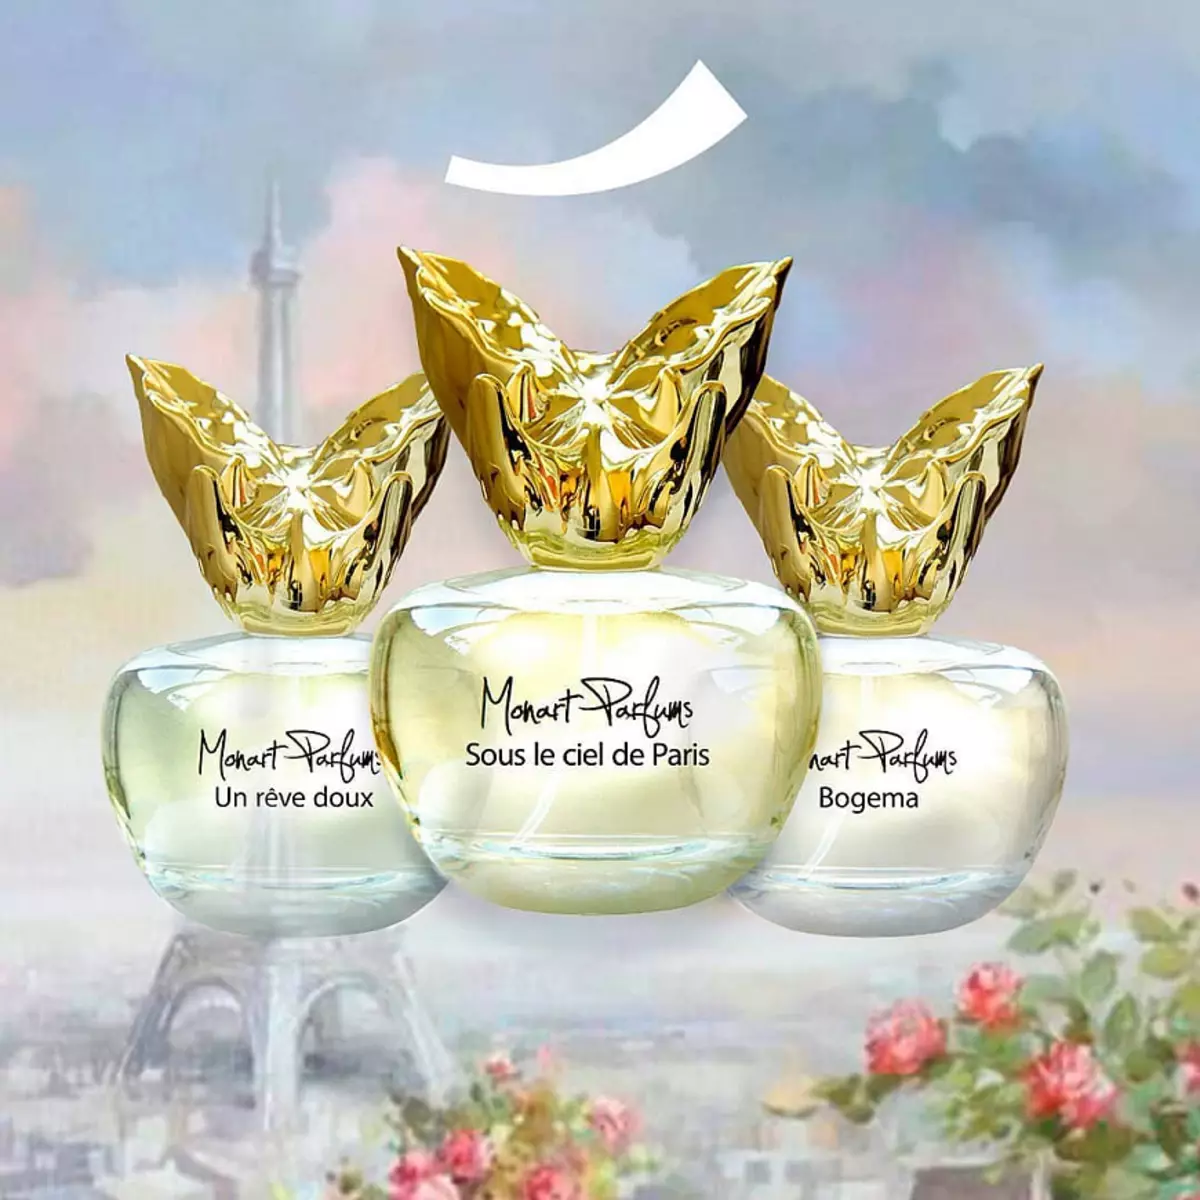 Poolnome Monart Parfums: un neve doux, device de la vie болон бусад сүнснүүд, сонголтын шалгуурууд 25187_6